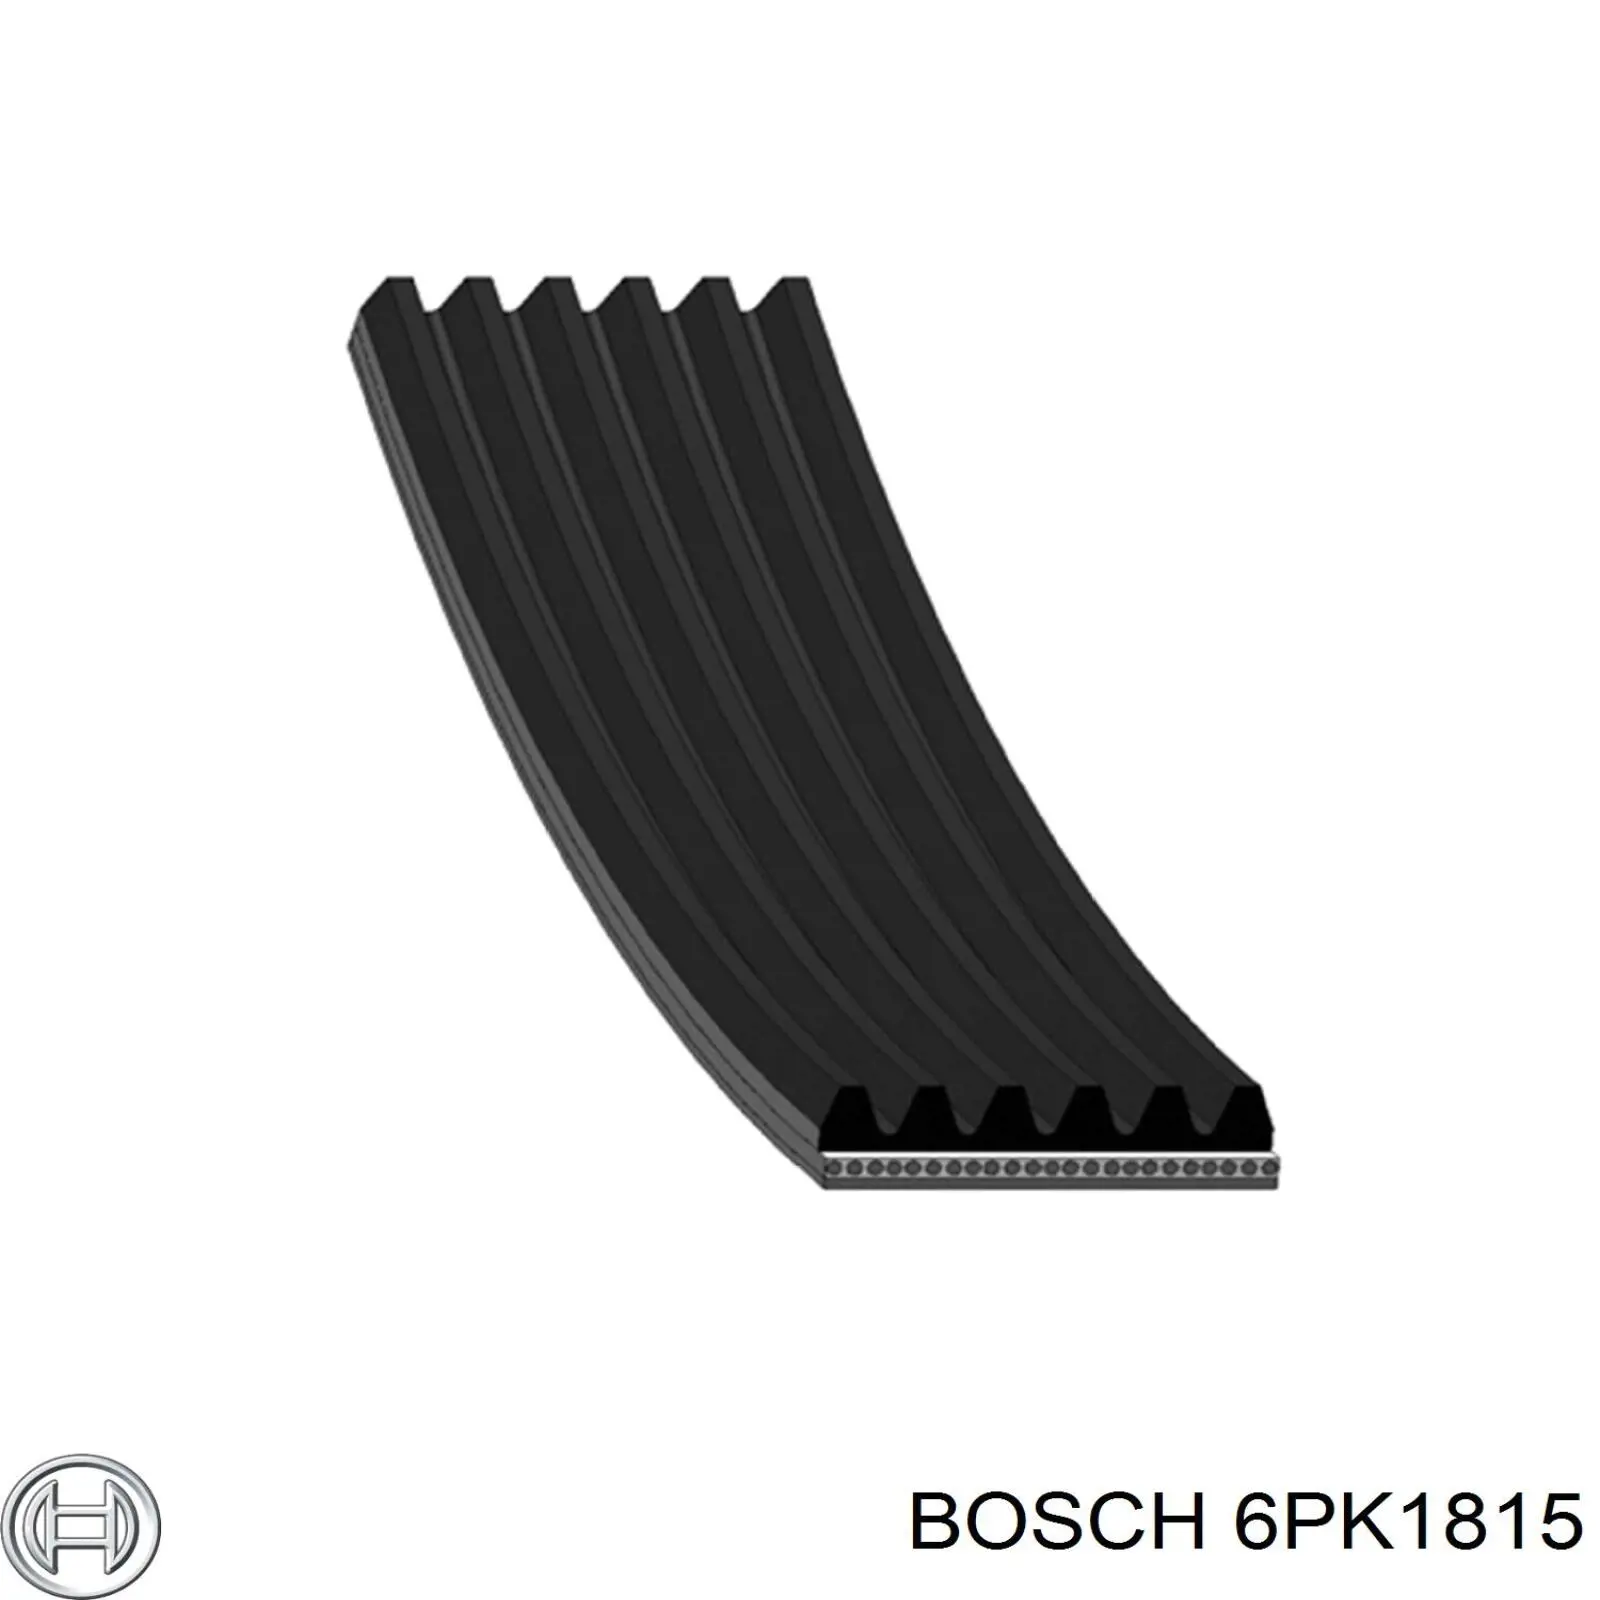 6PK1815 Bosch correa trapezoidal